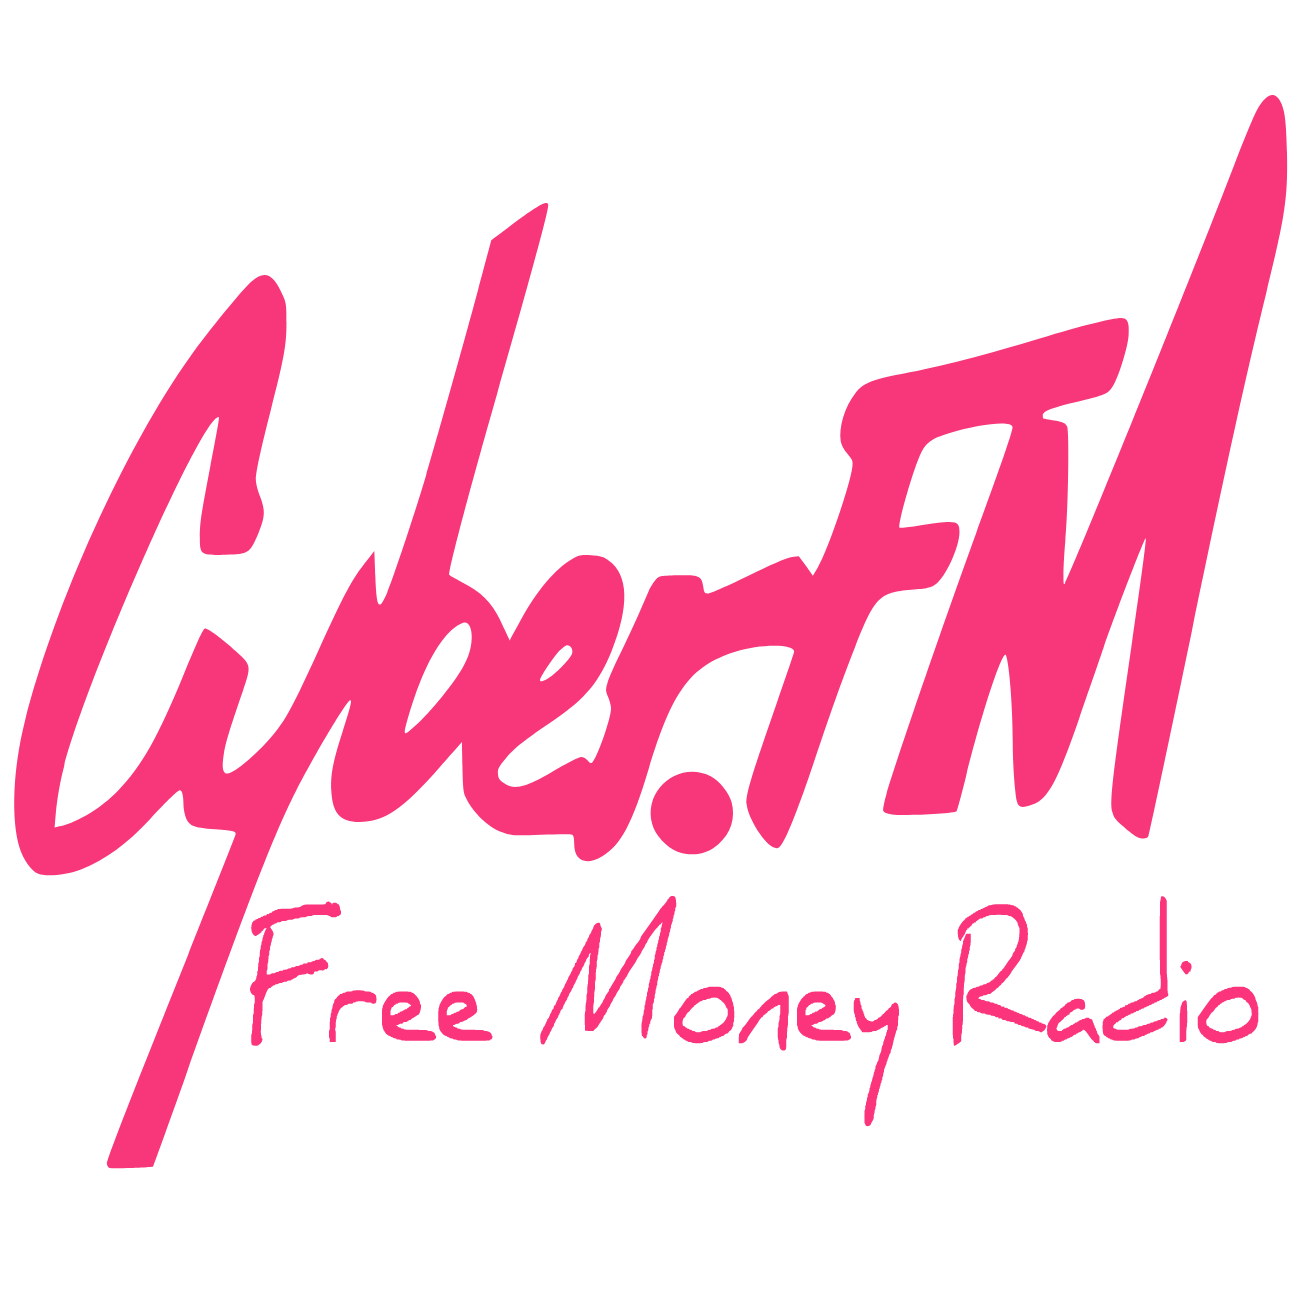 CyberFM Logo